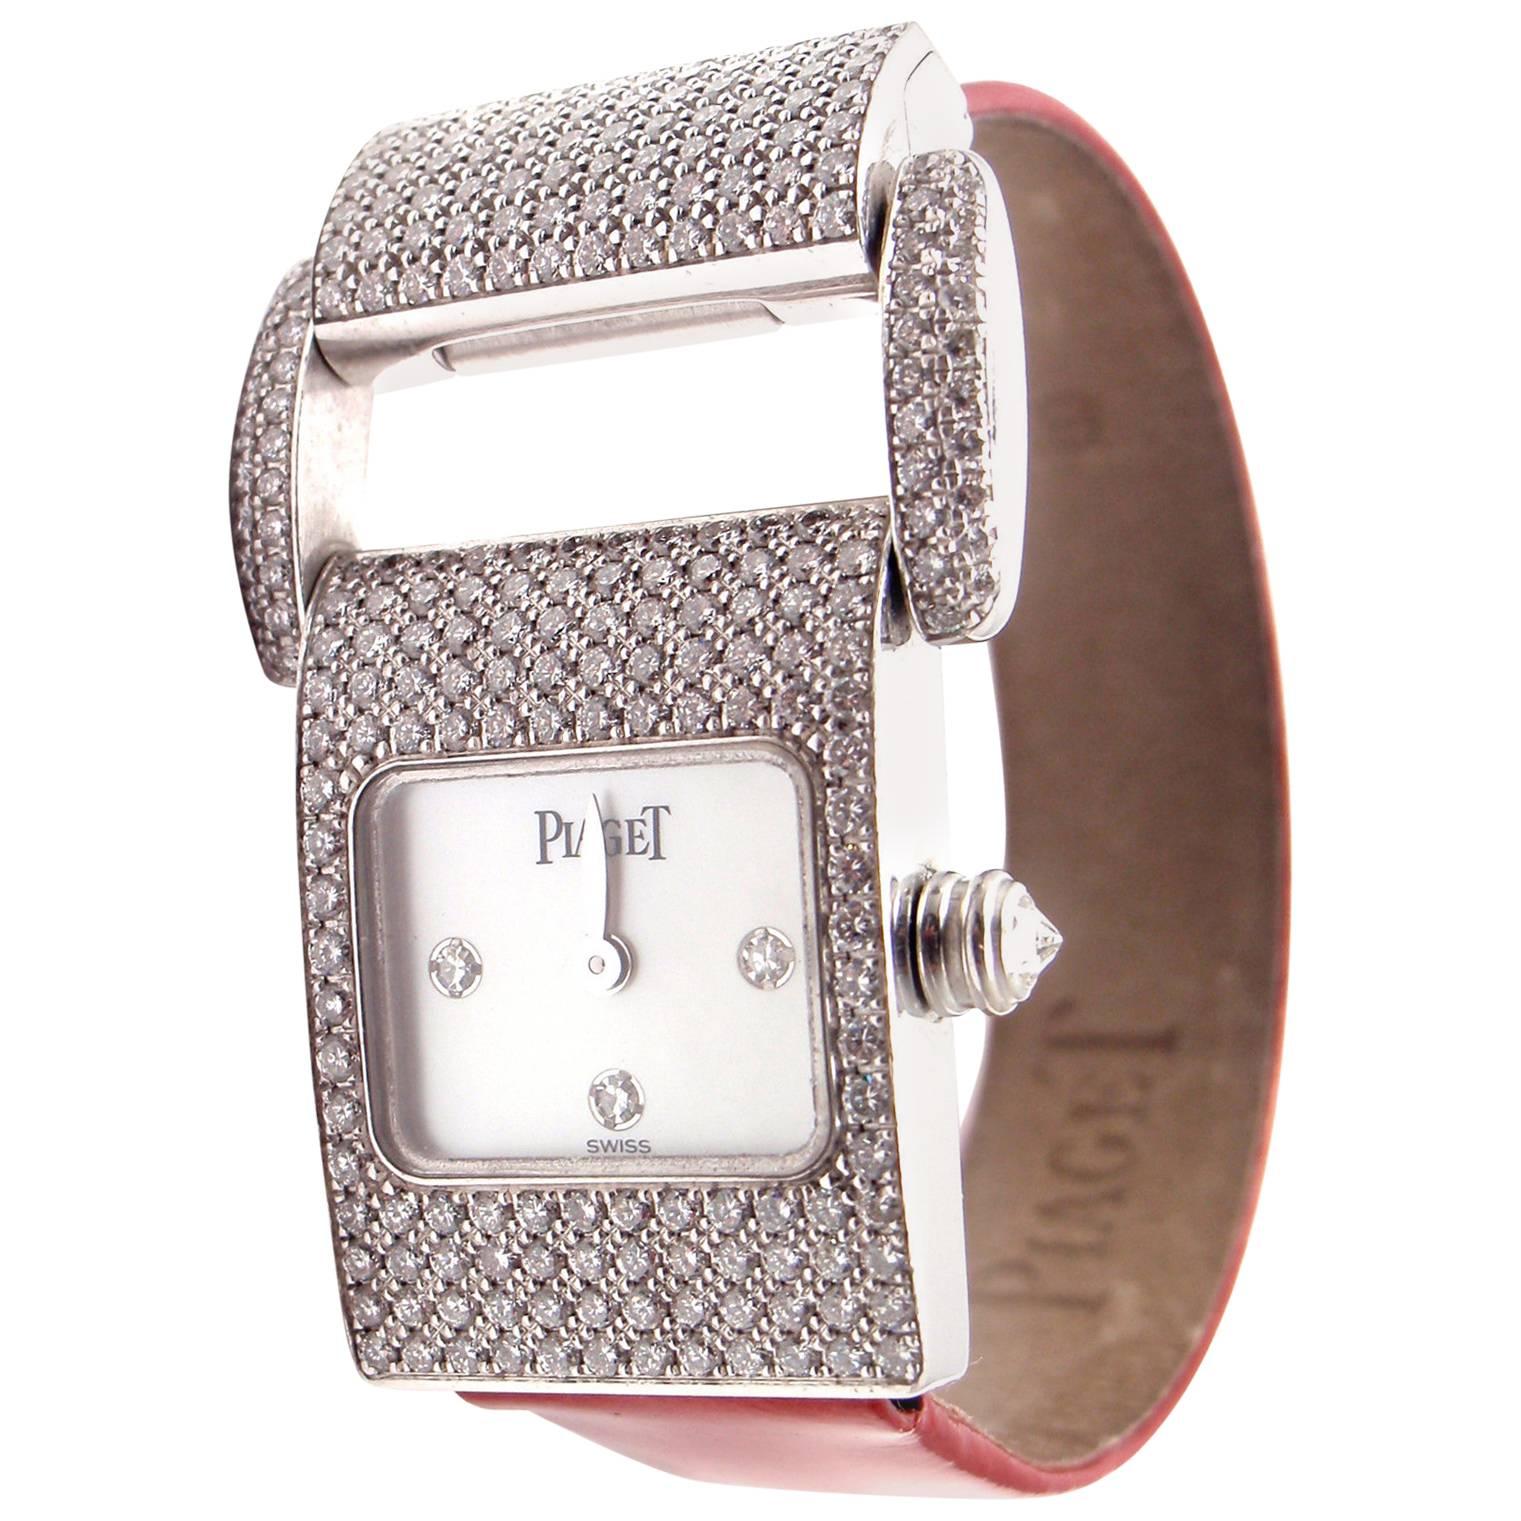 Piaget Miss Protocole Diamond 8 Straps White Gold Ladies Wristwatch